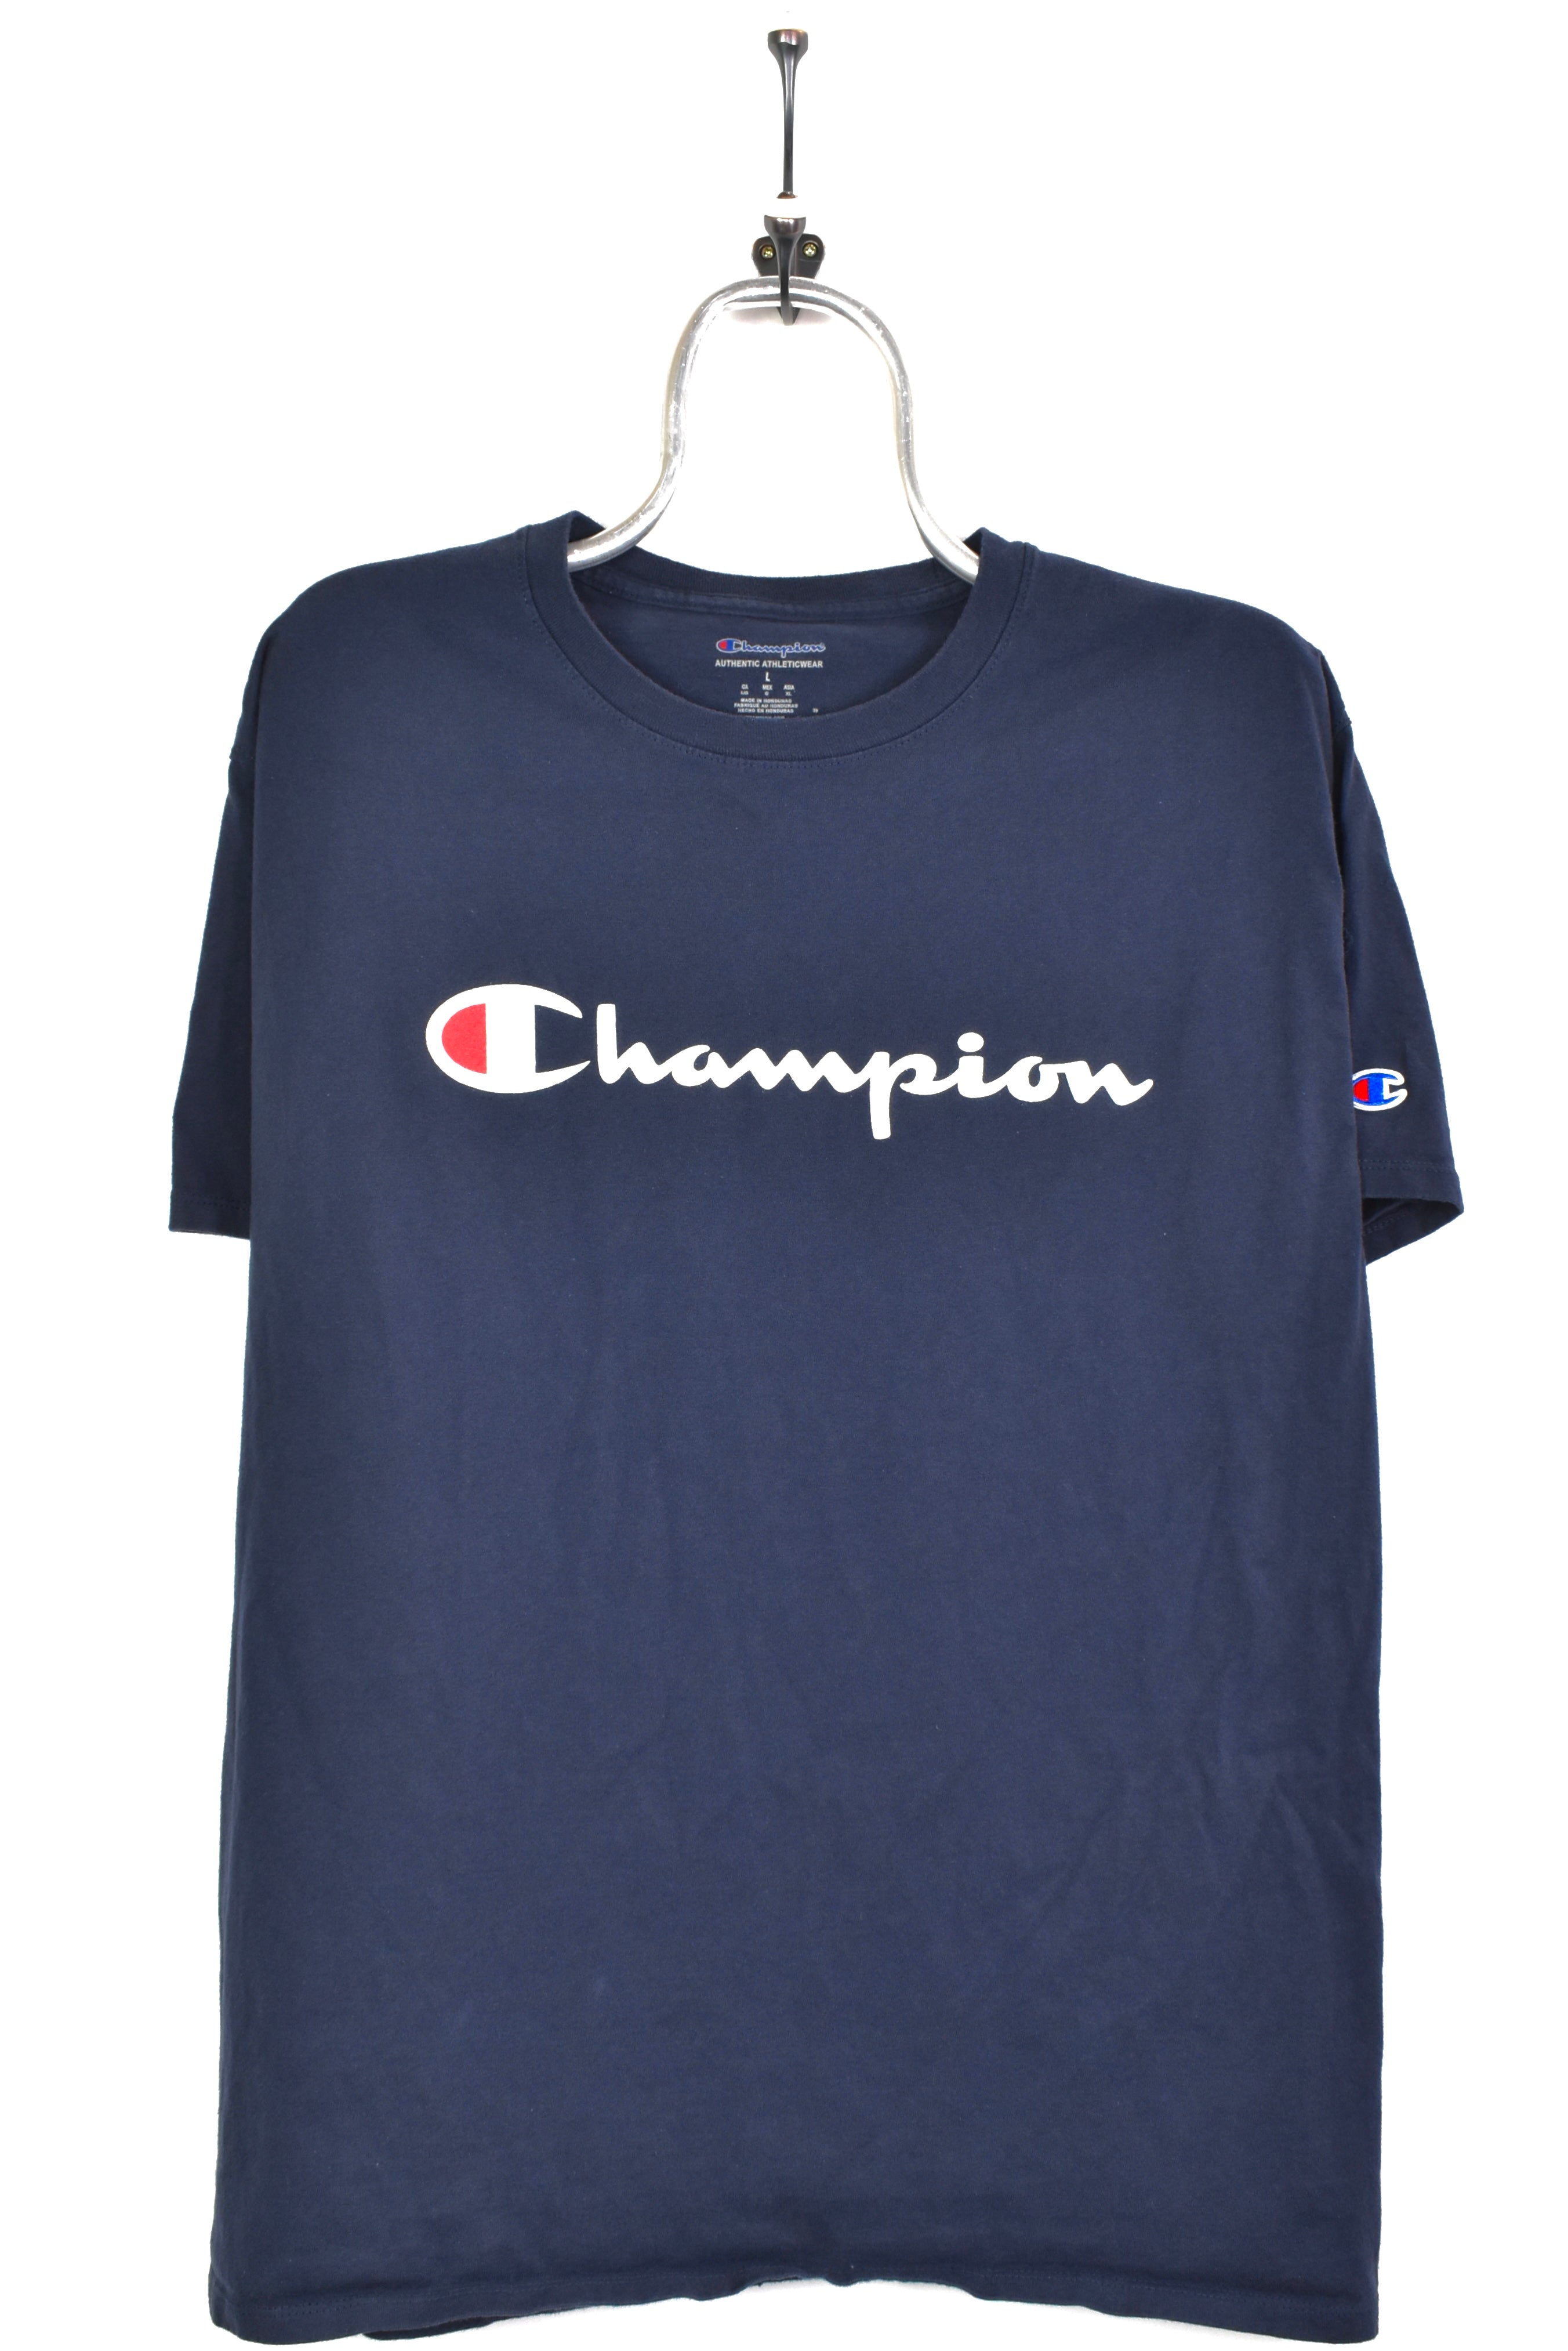 Modern Champion shirt, short sleeve graphic tee - medium, navy blue